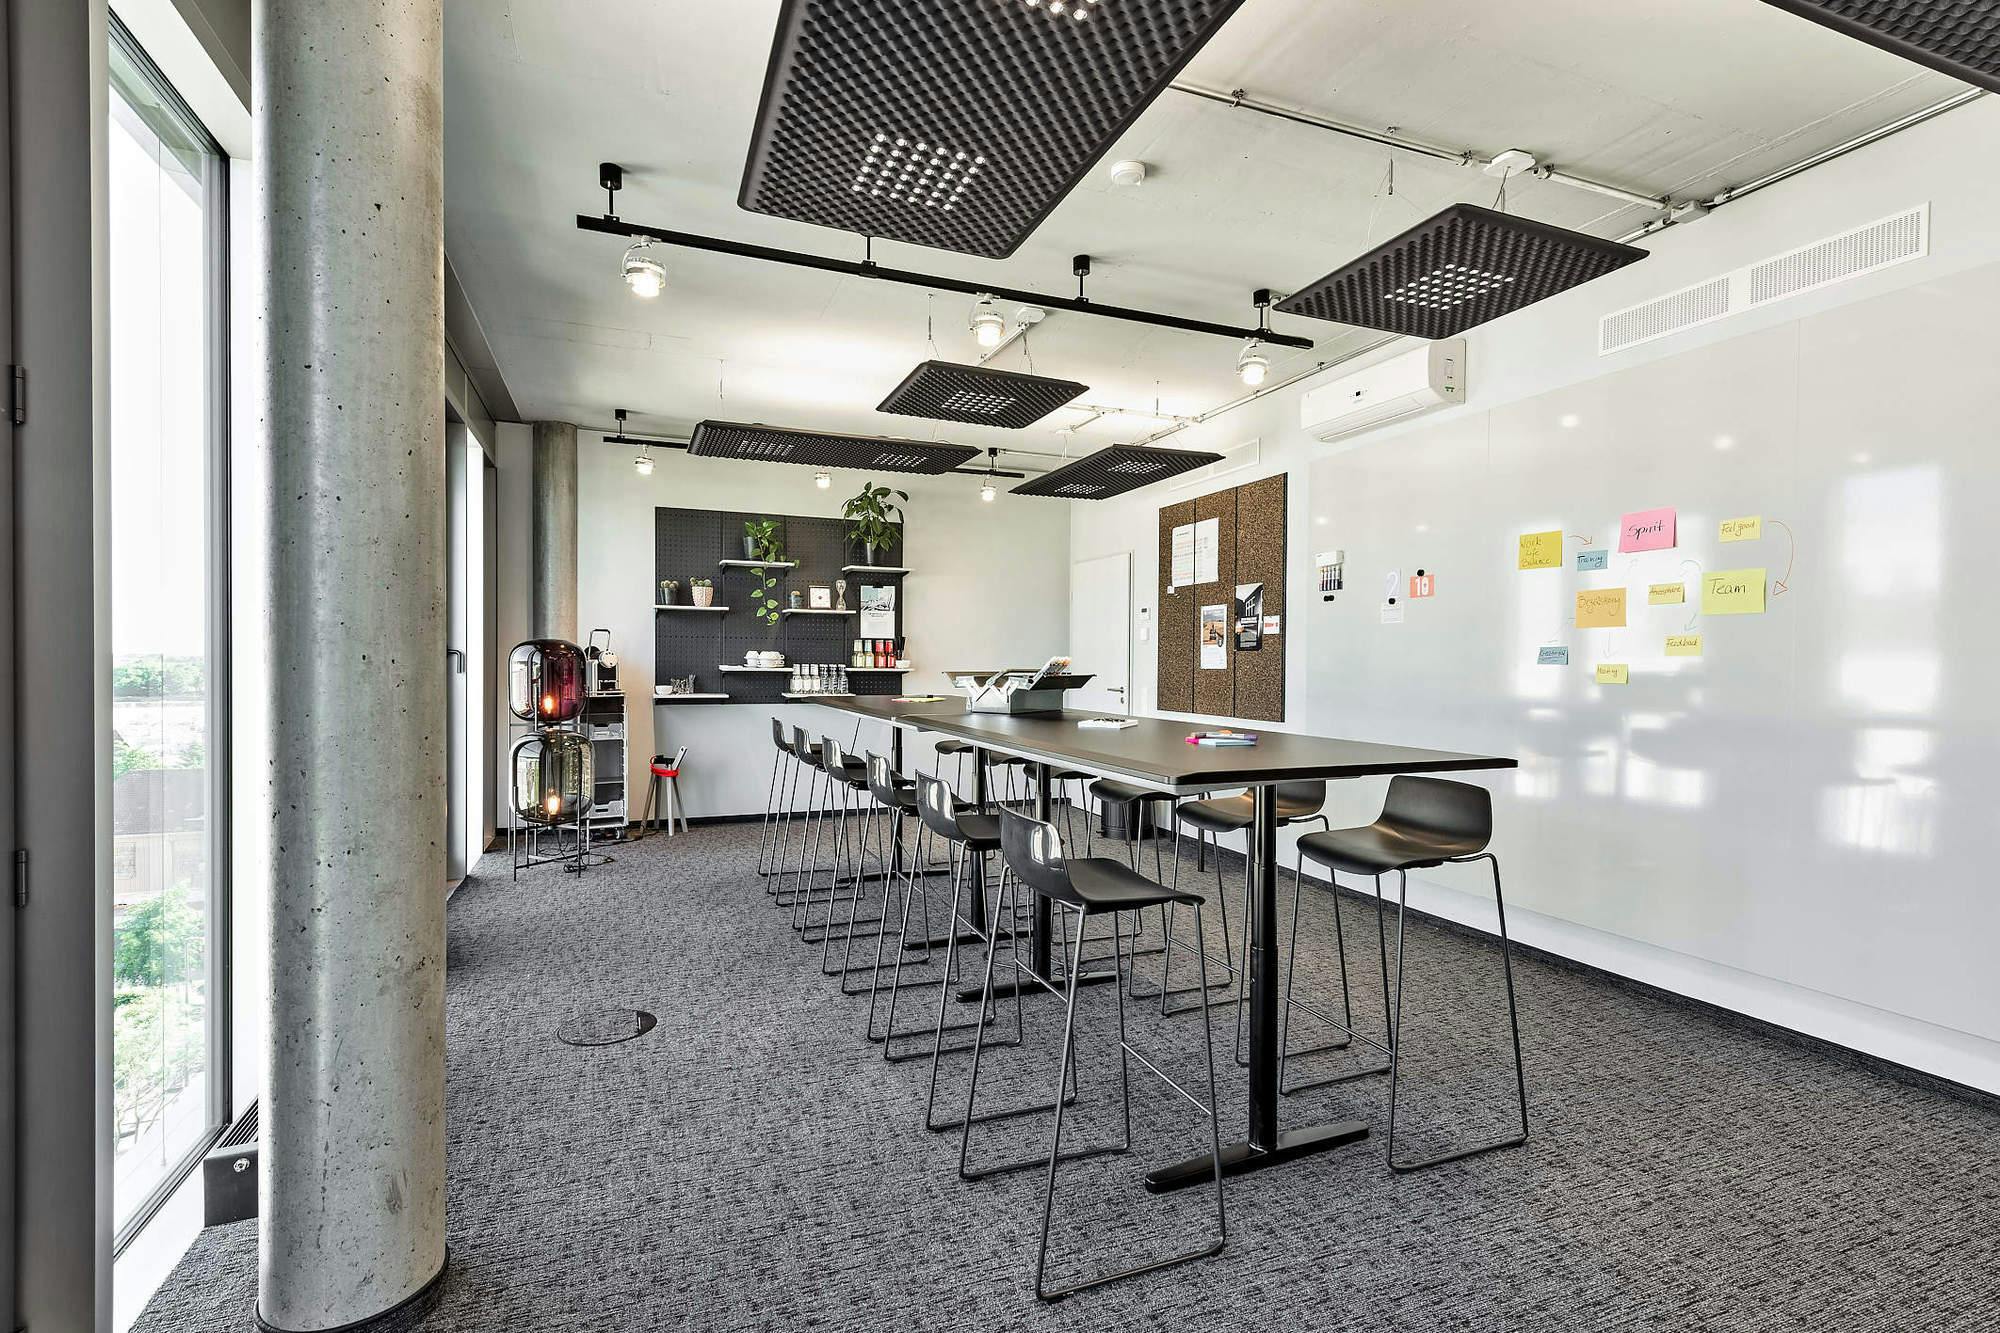 Meet&Move Meetingraum Design Offices